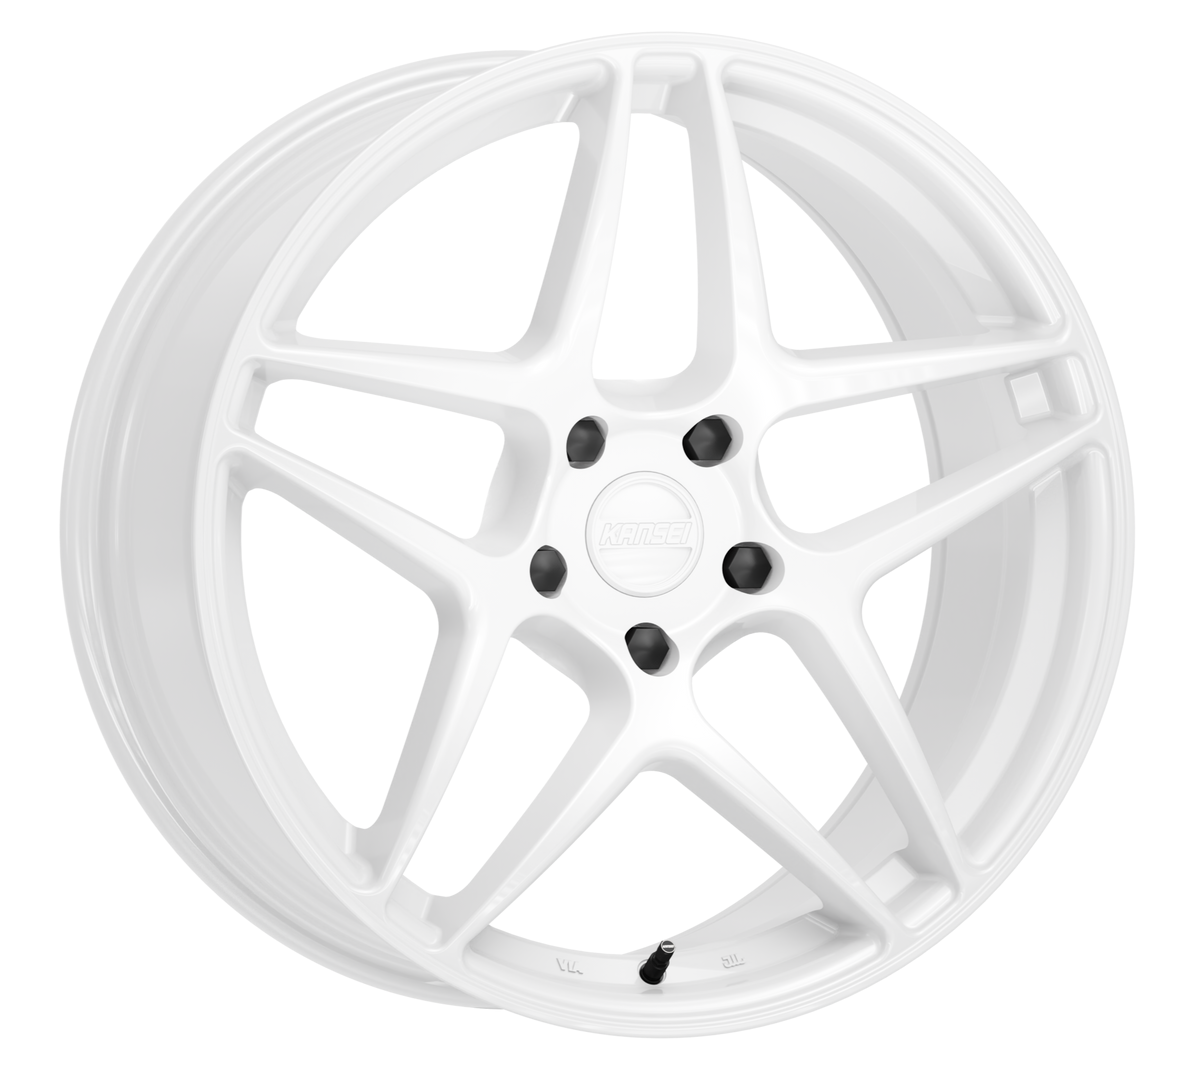 K15W ASTRO Wheel, Size: 19" x 10.50", Bolt Pattern: 5 x 120 mm, Backspace: 6.62" [Finish: Gloss White]